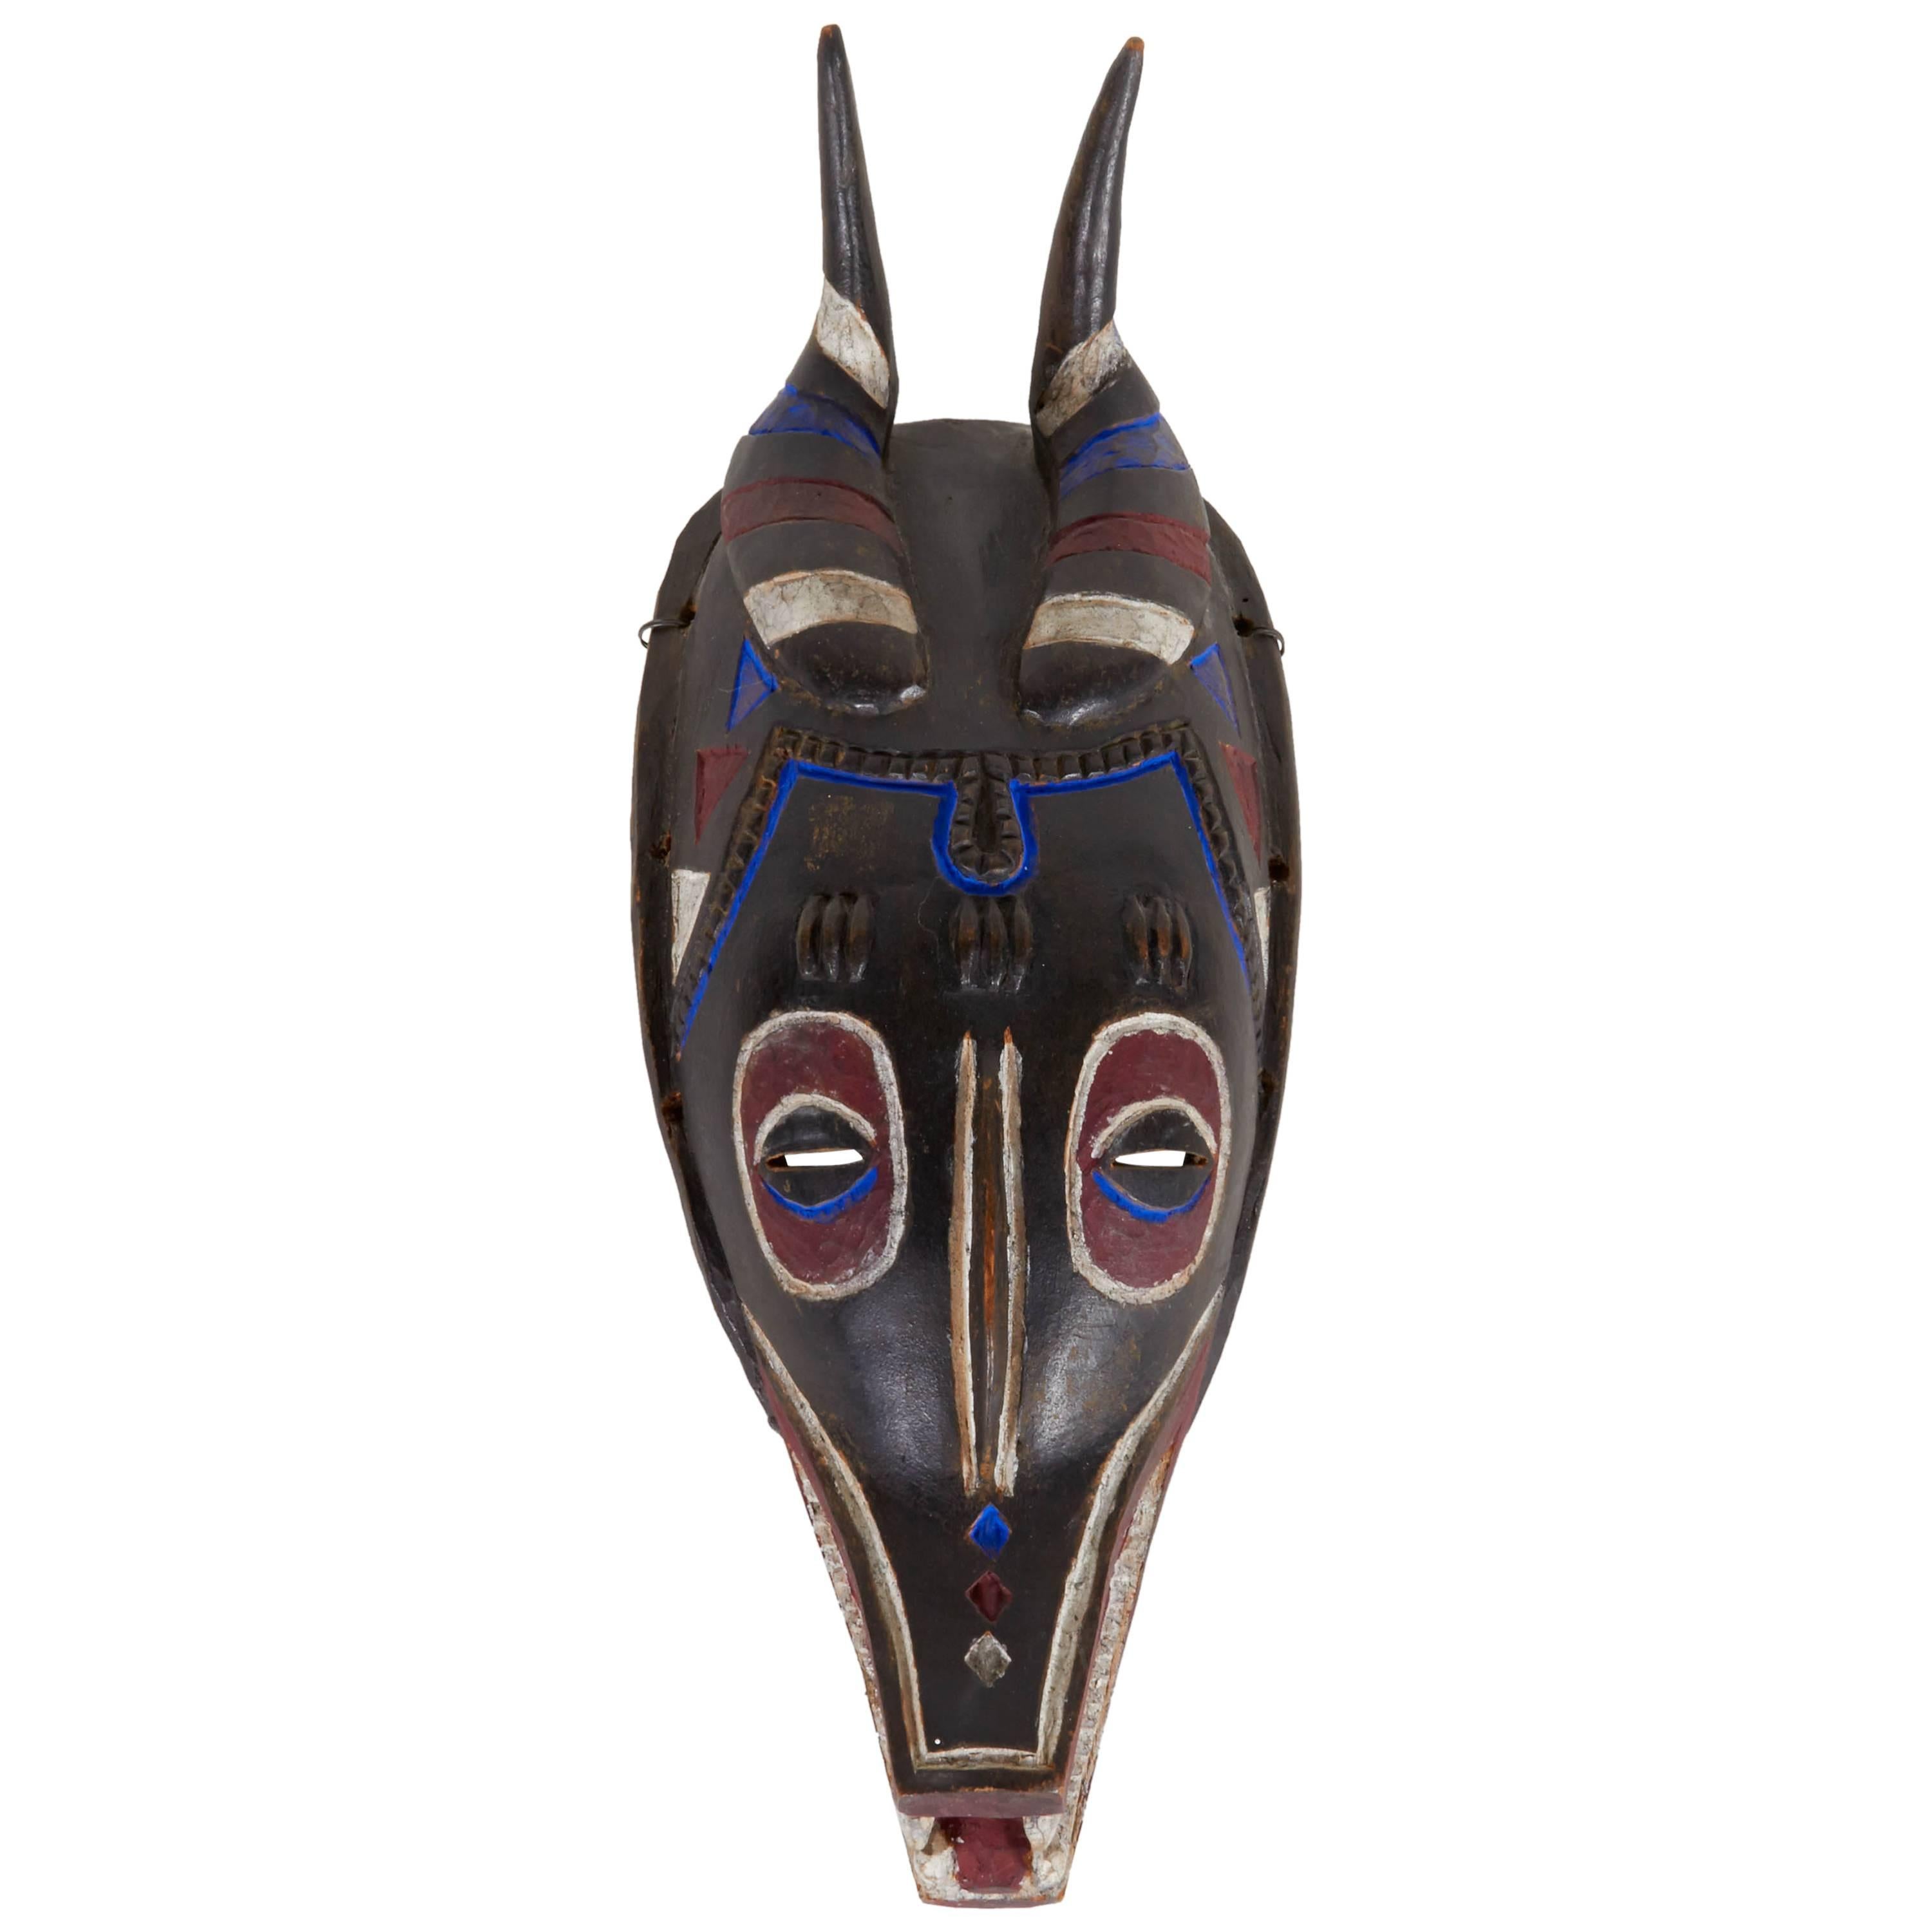 Guro Zamble (Antelope) Mask from Ivory Coast